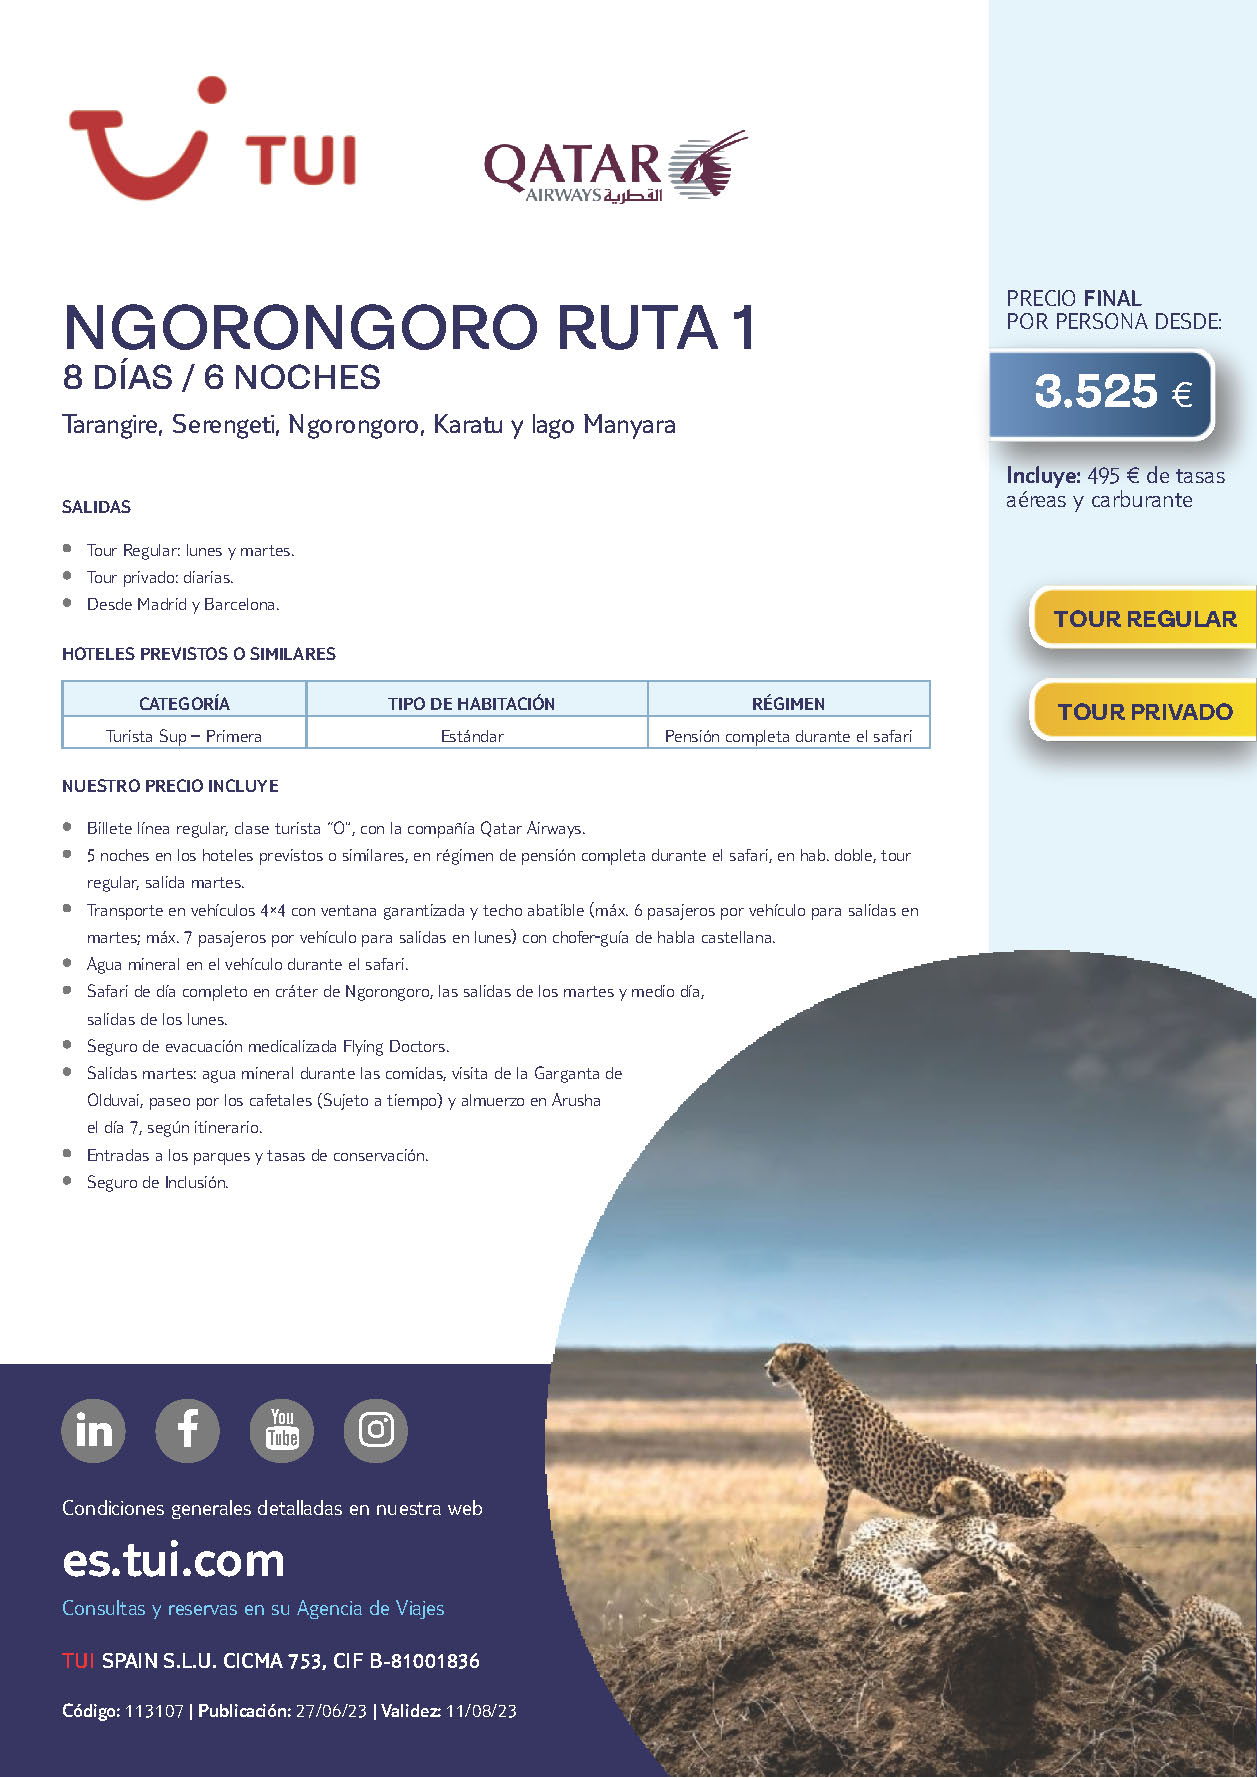 Oferta TUI Tanzania Safari Ngorongoro Ruta I 8 dias Agosto a Diciembre 2023 salidas desde Barcelona y Madrid vuelos Qatar Airways